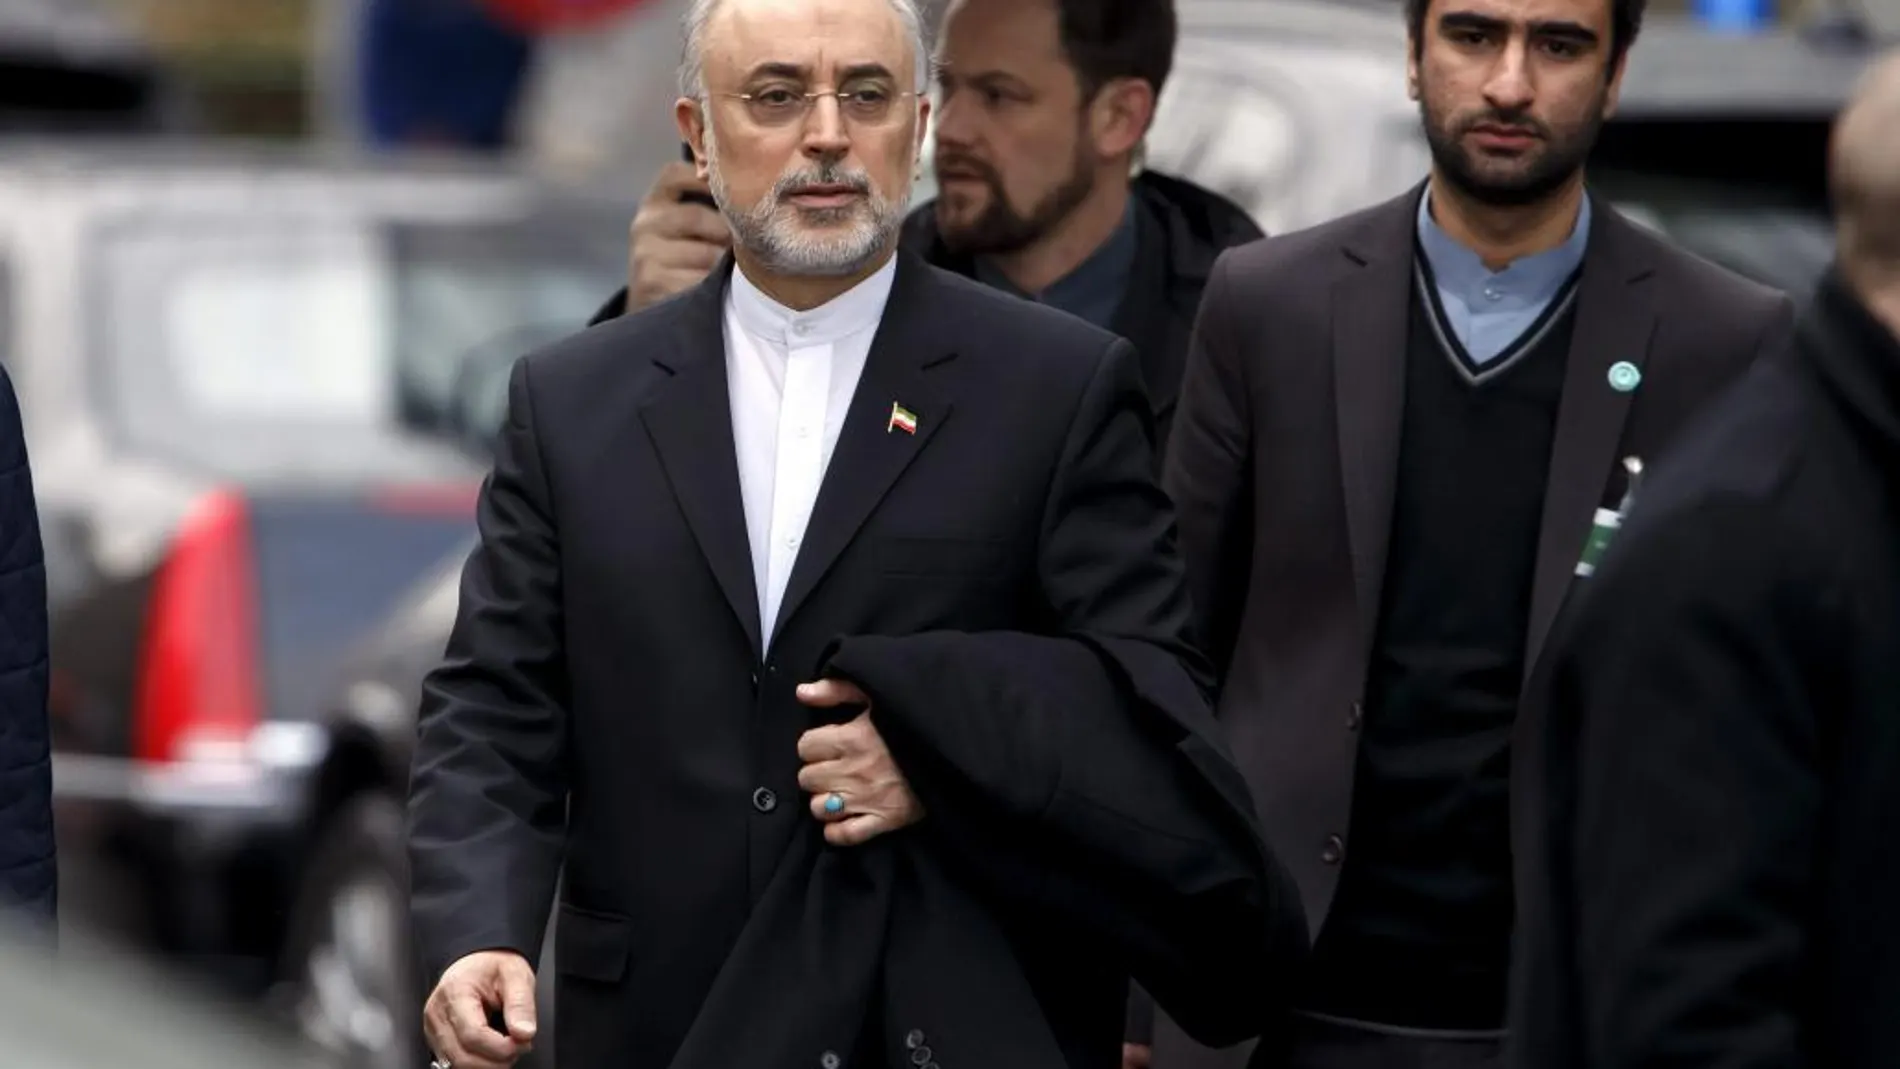 El director de la Organización de Energía Atómica de Irán, Ali Akbar Salehi (i), tras su reunión con altos cargos estadounidenses hoy en Ginebra.